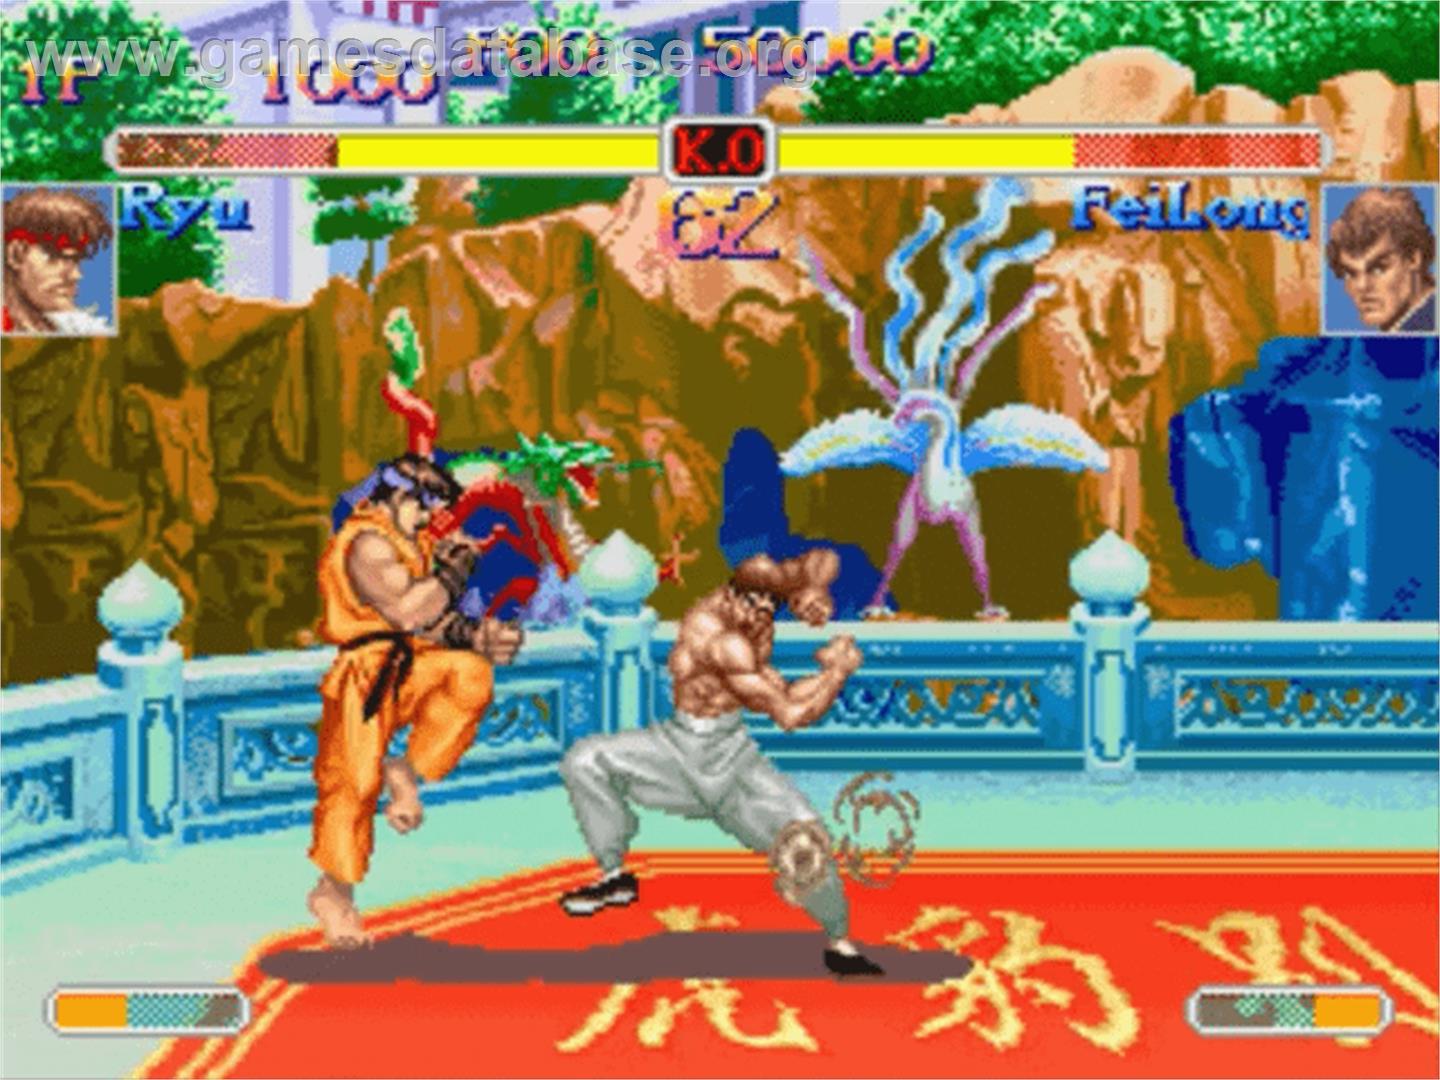 Super Street Fighter II Turbo - Panasonic 3DO - Artwork - In Game